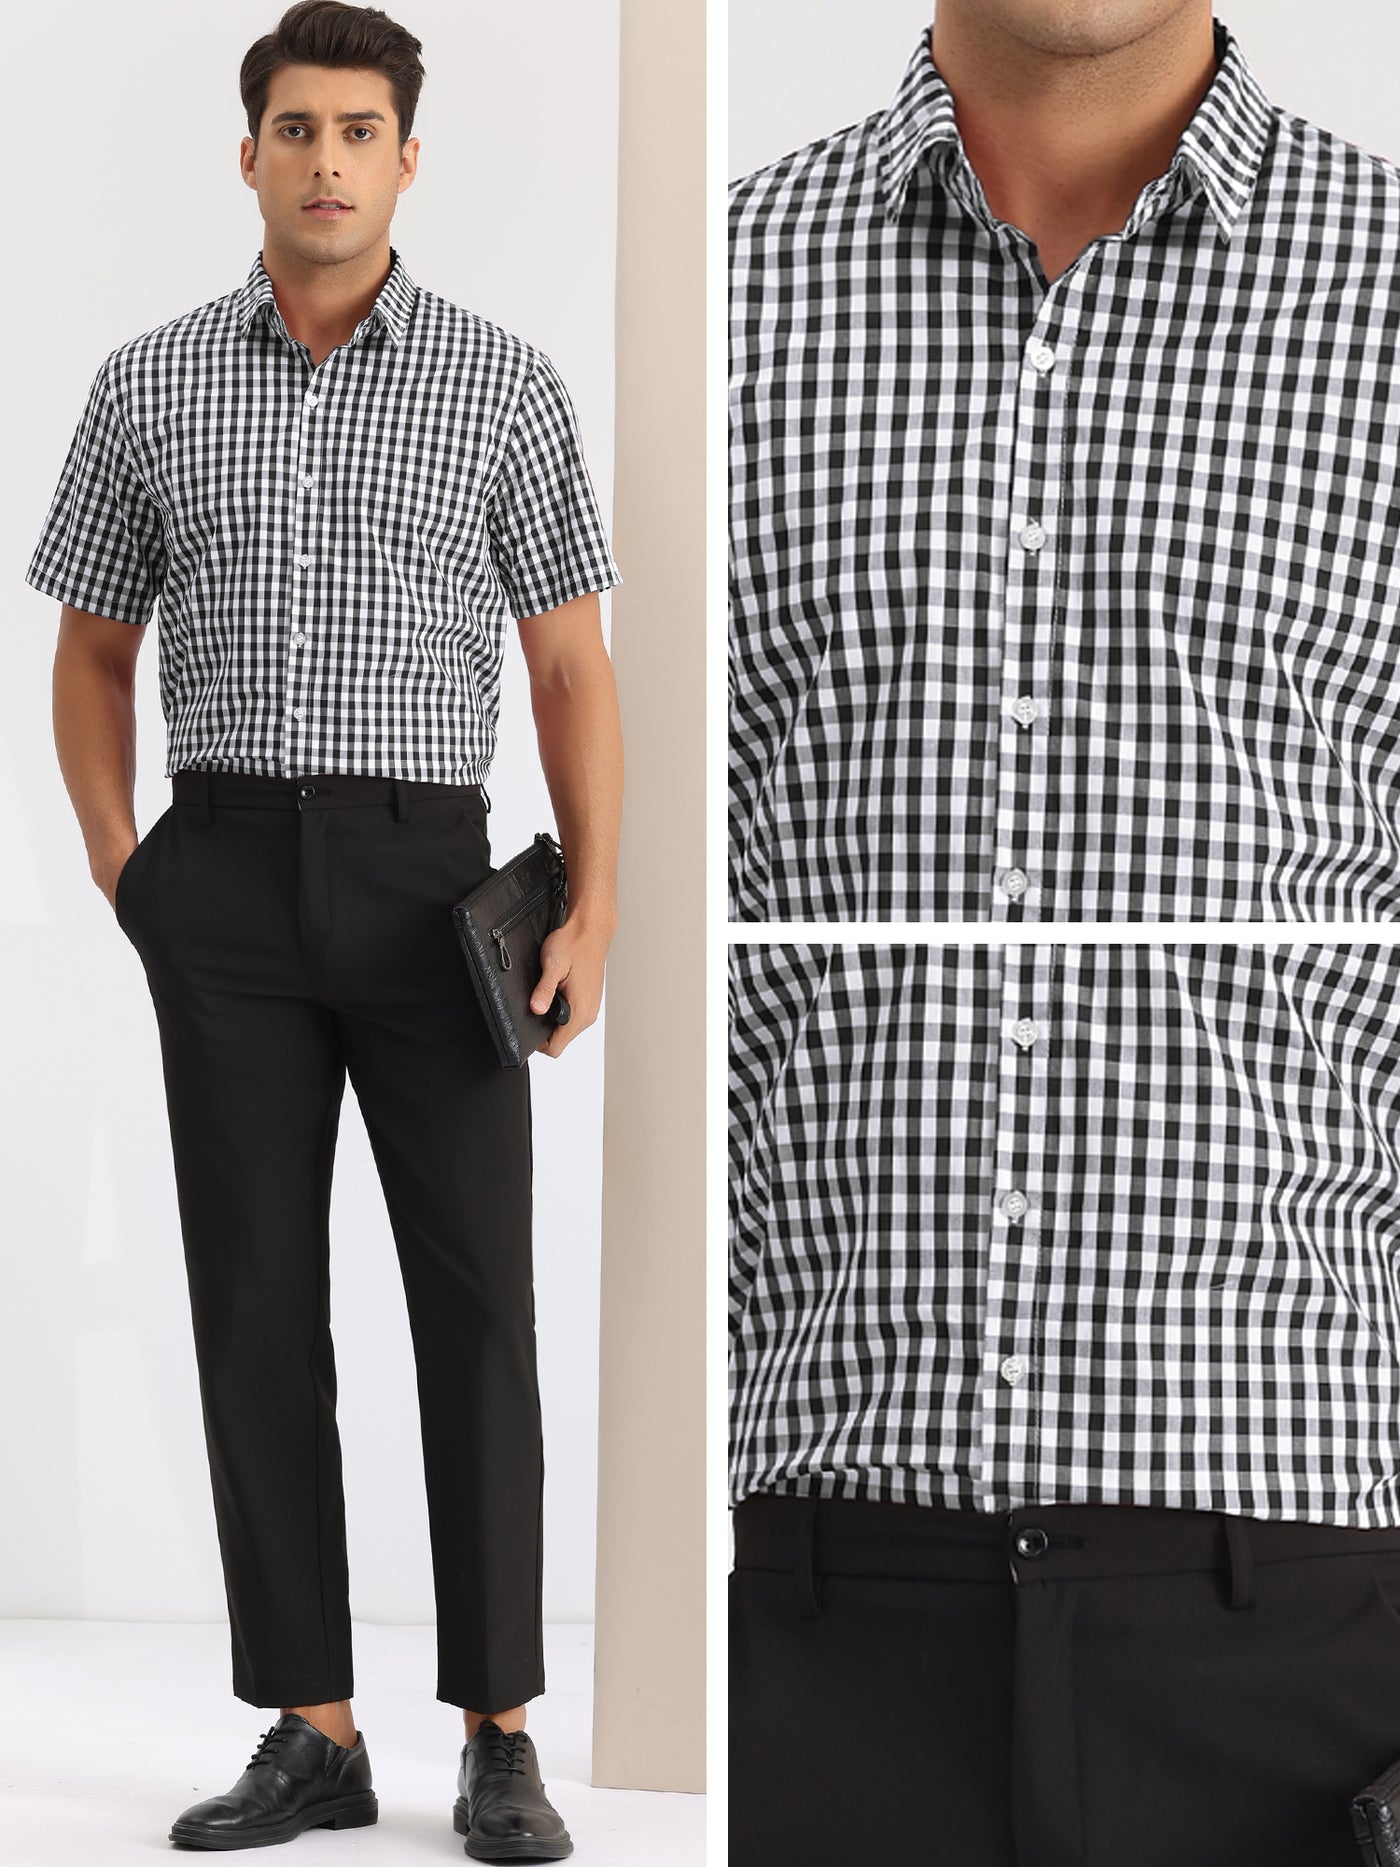 Bublédon Checks Dress Shirts for Men's Short Sleeves Formal Plaid Shirt